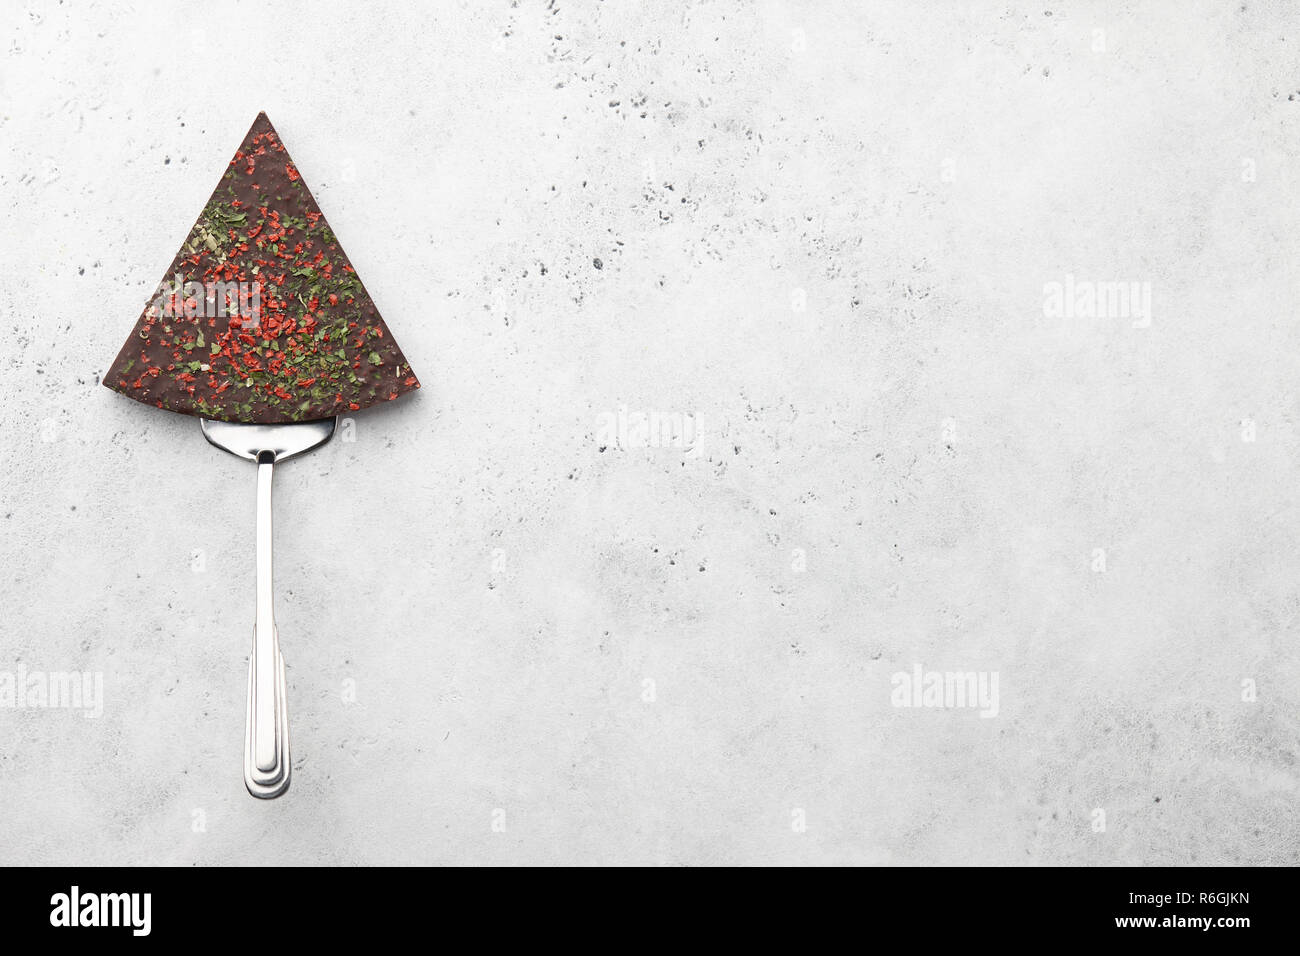 Triangle chocolate piece on spatula on stone background Stock Photo